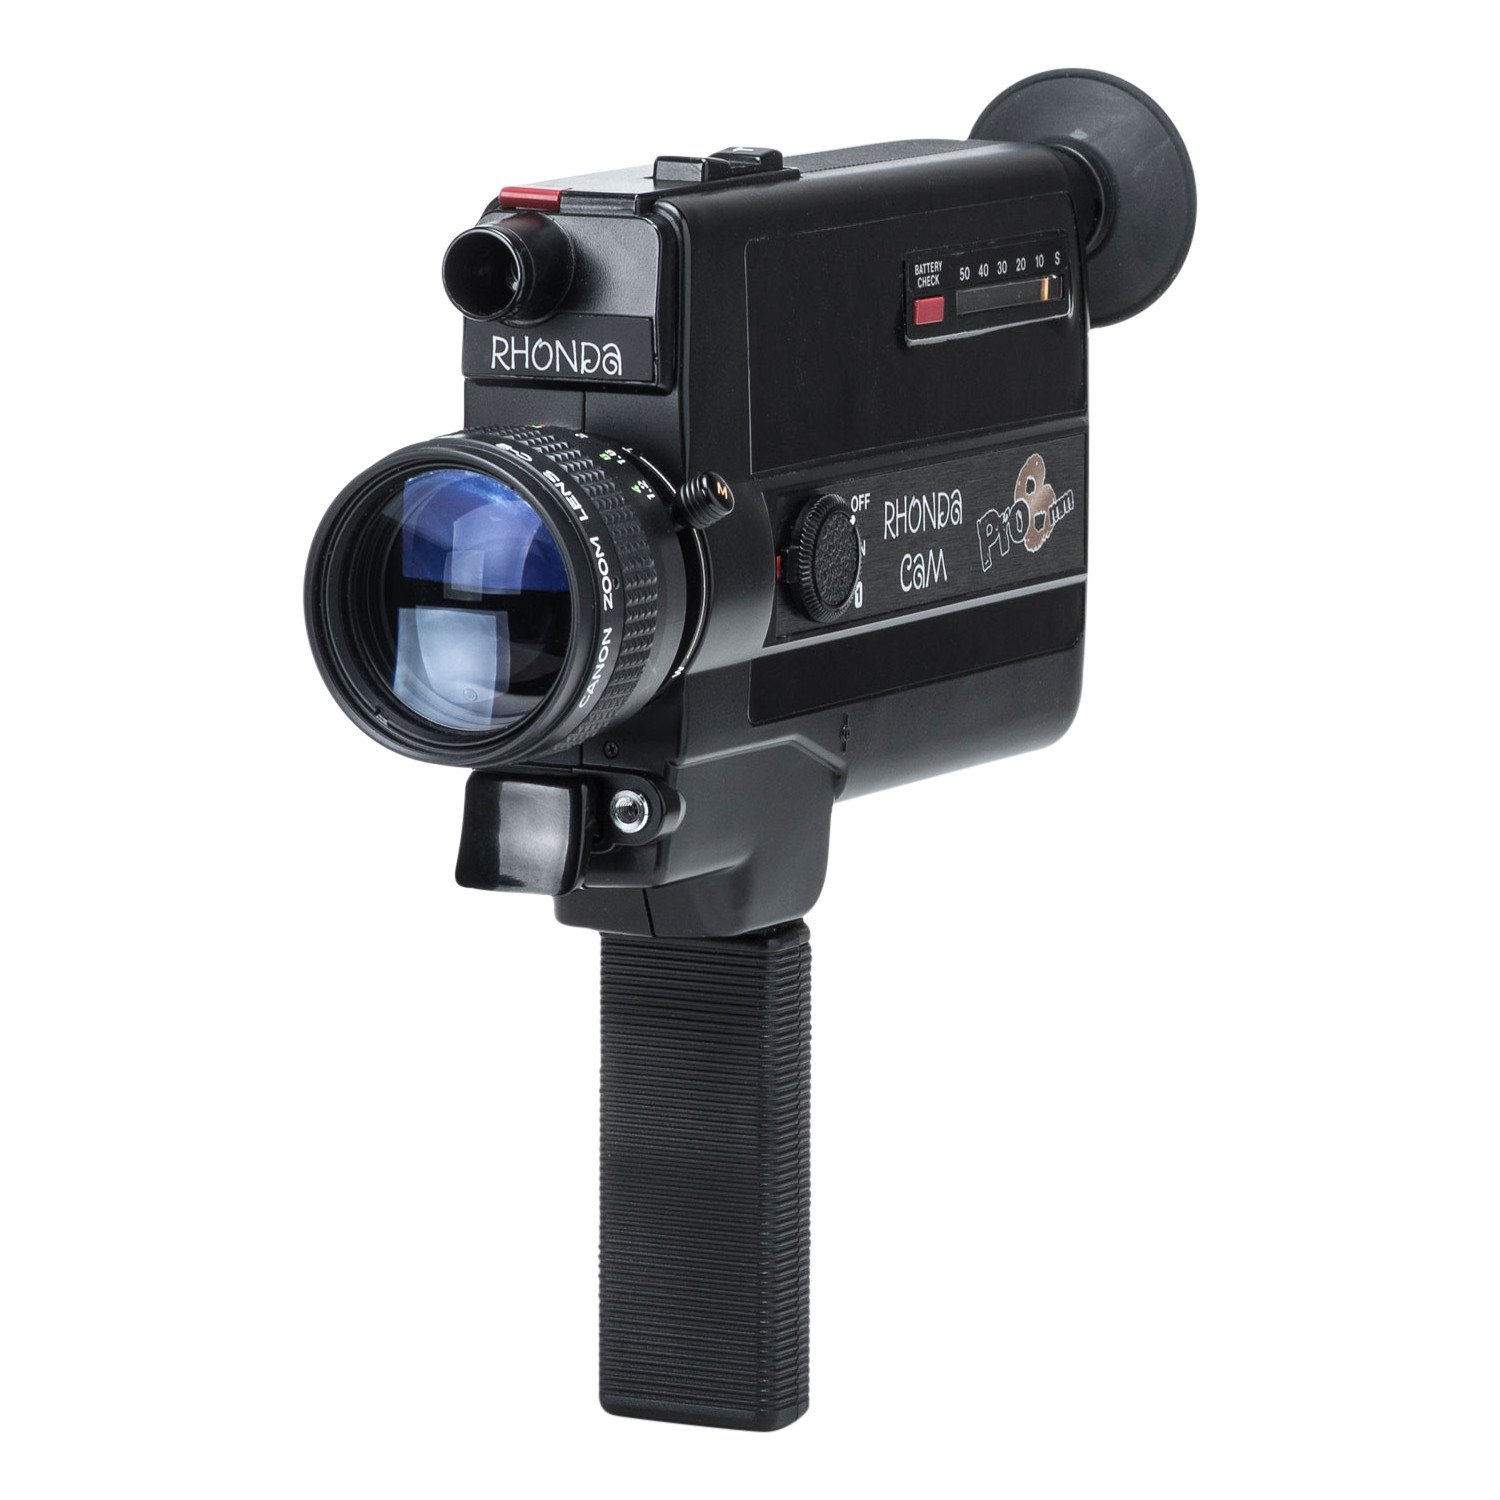 Rhonda CAM Super 8 Camera – Pro8mm